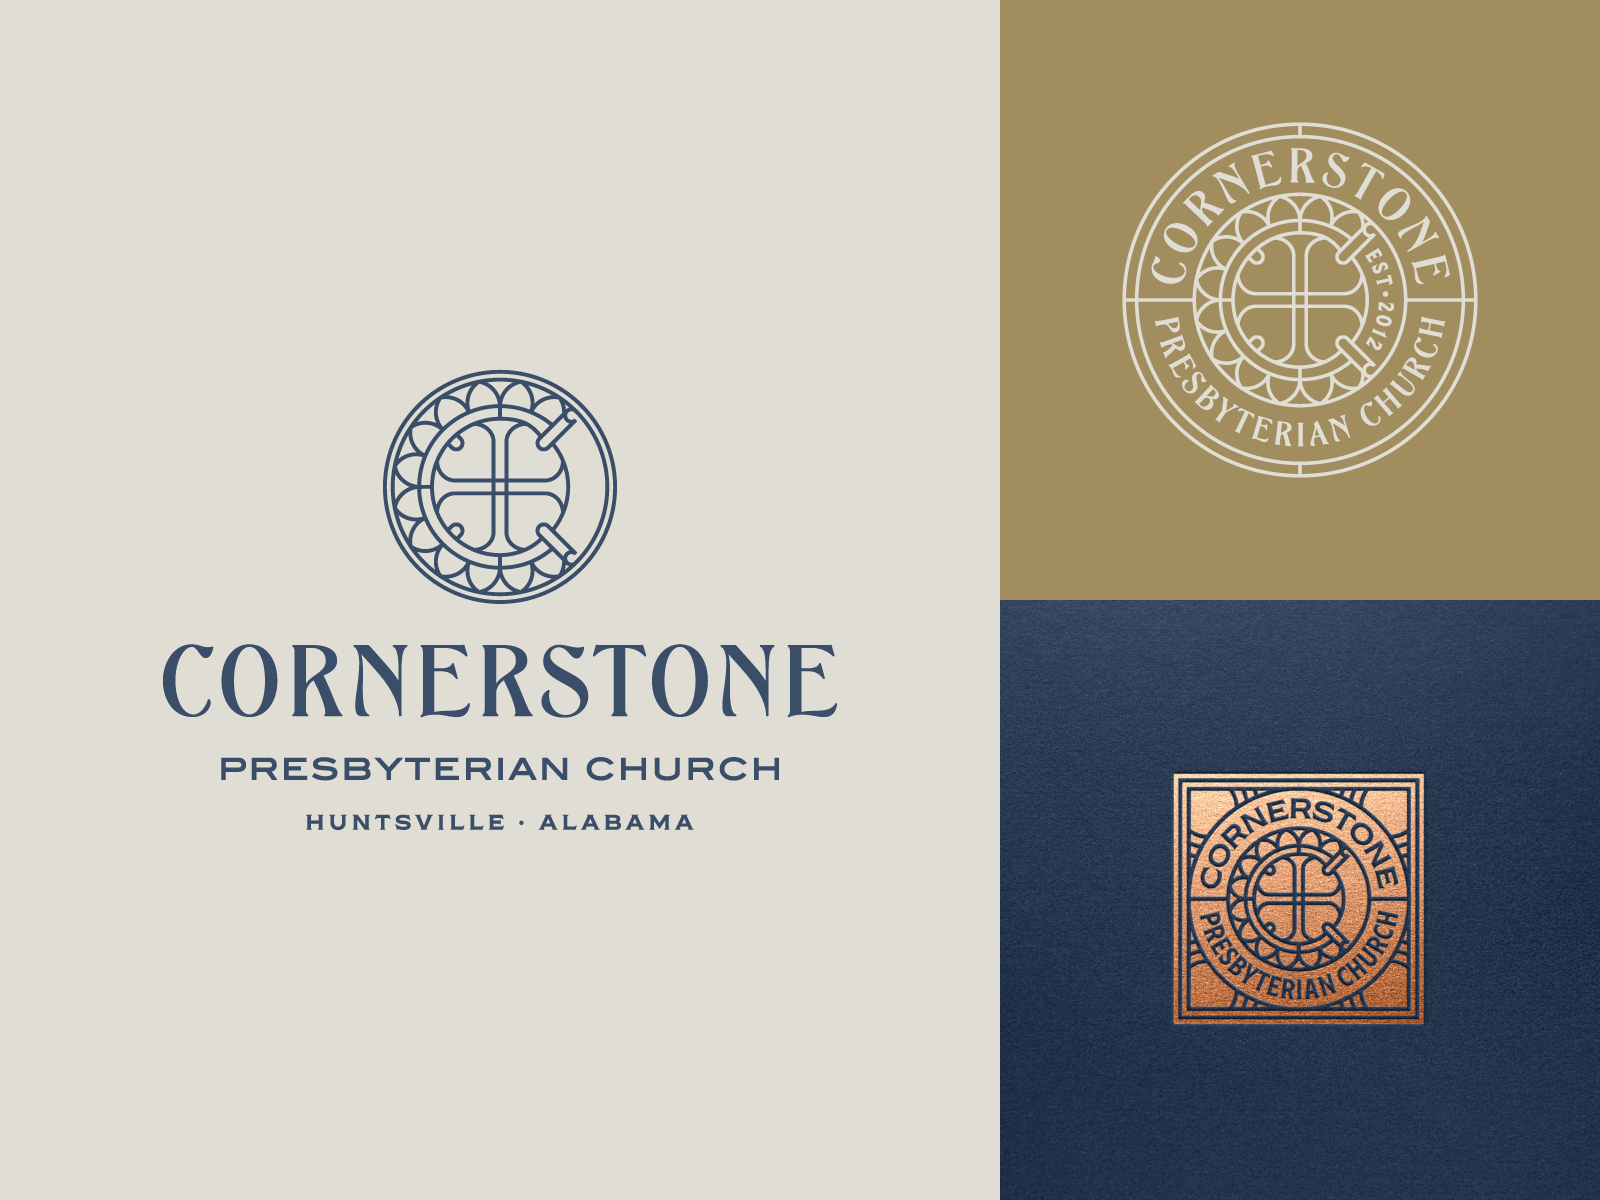 Cornerstone Presbyterian Church by Peter Voth on Dribbble